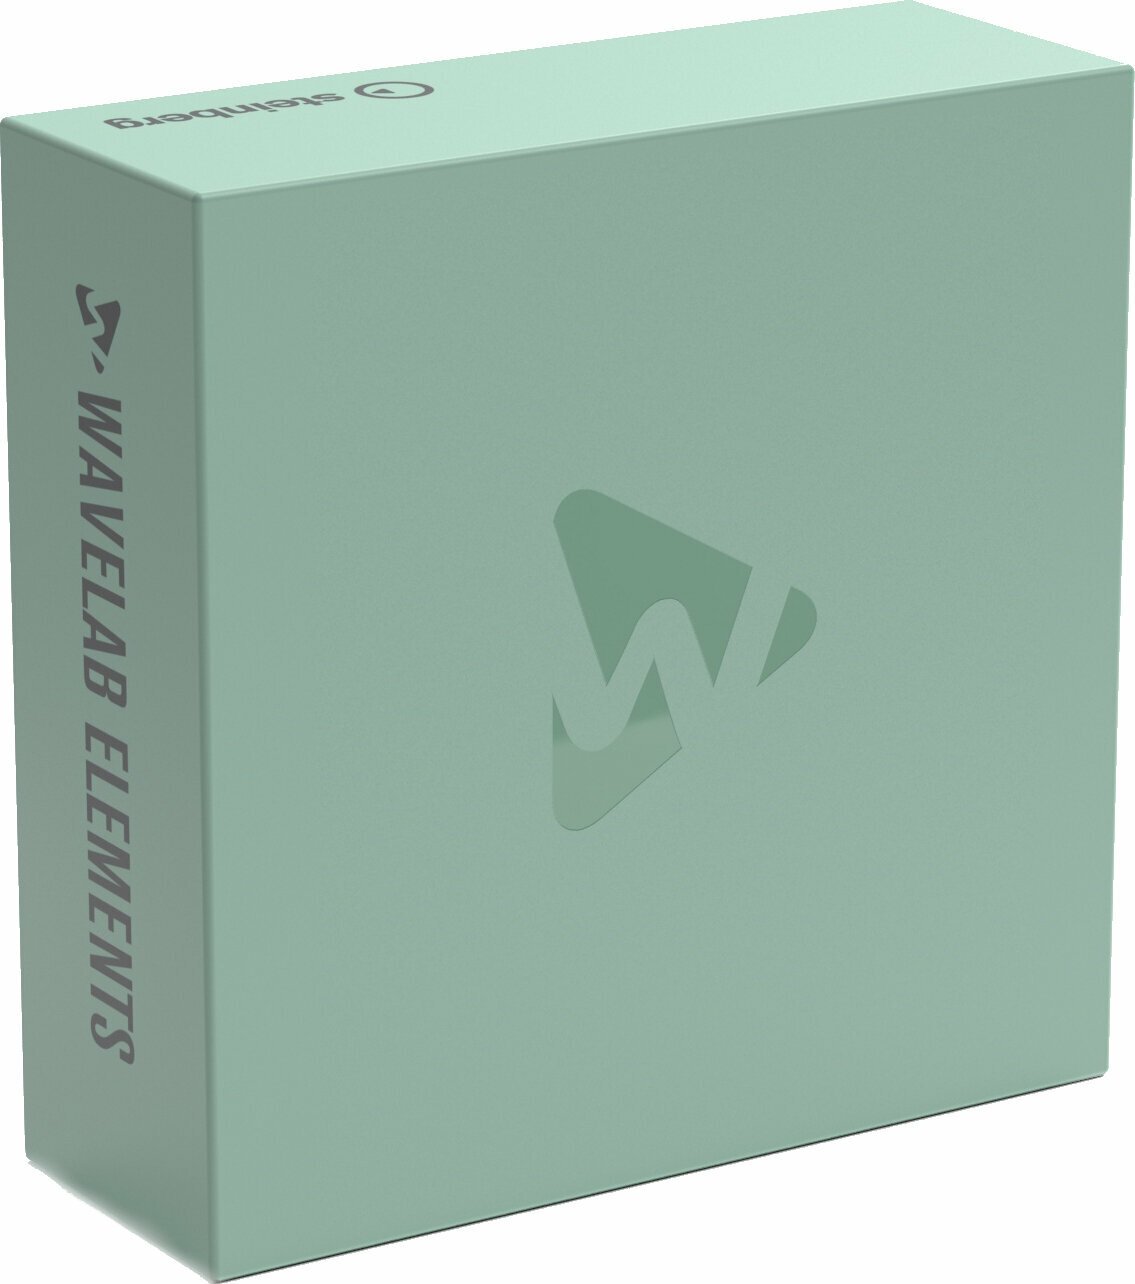 Mastering software Steinberg Wavelab Elements 11